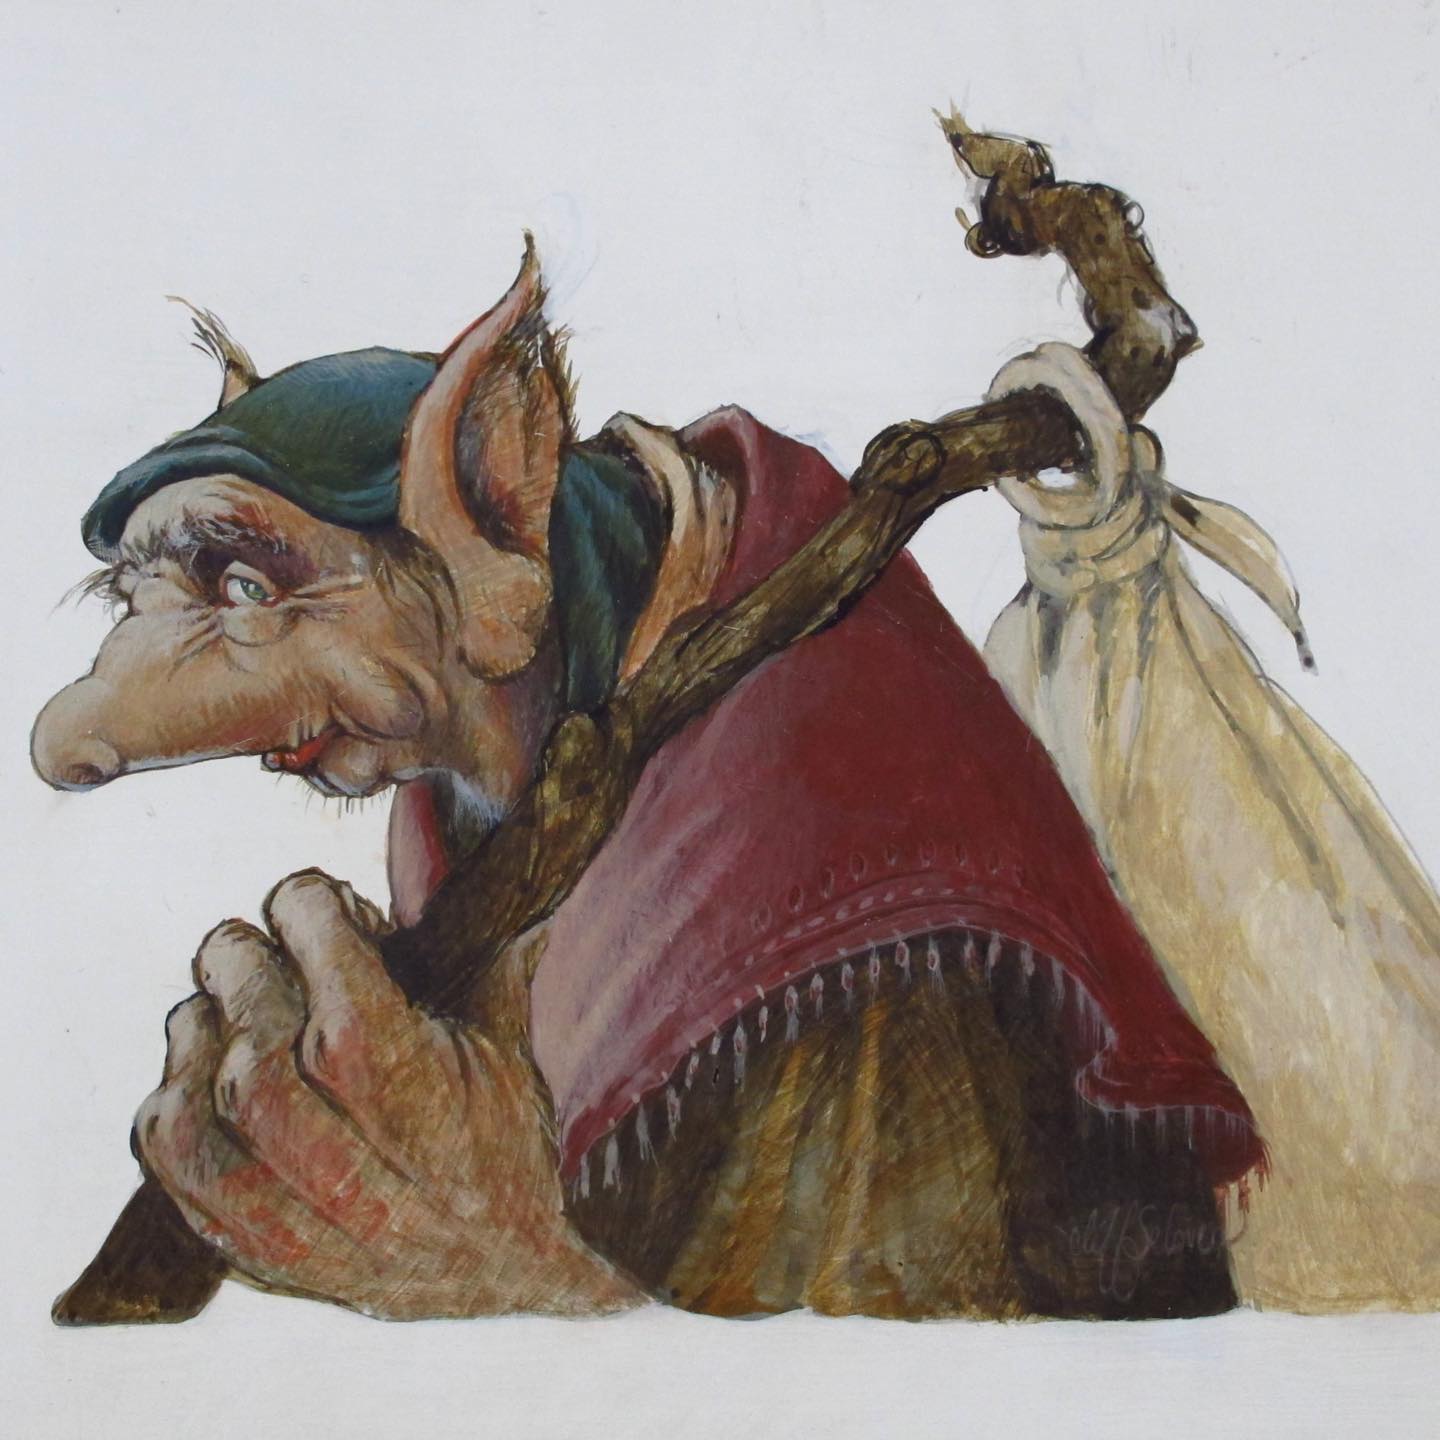 Egg Tempera Fantasy Illustration Portrait of an Ogre or Troll with Knapsack c. 1980